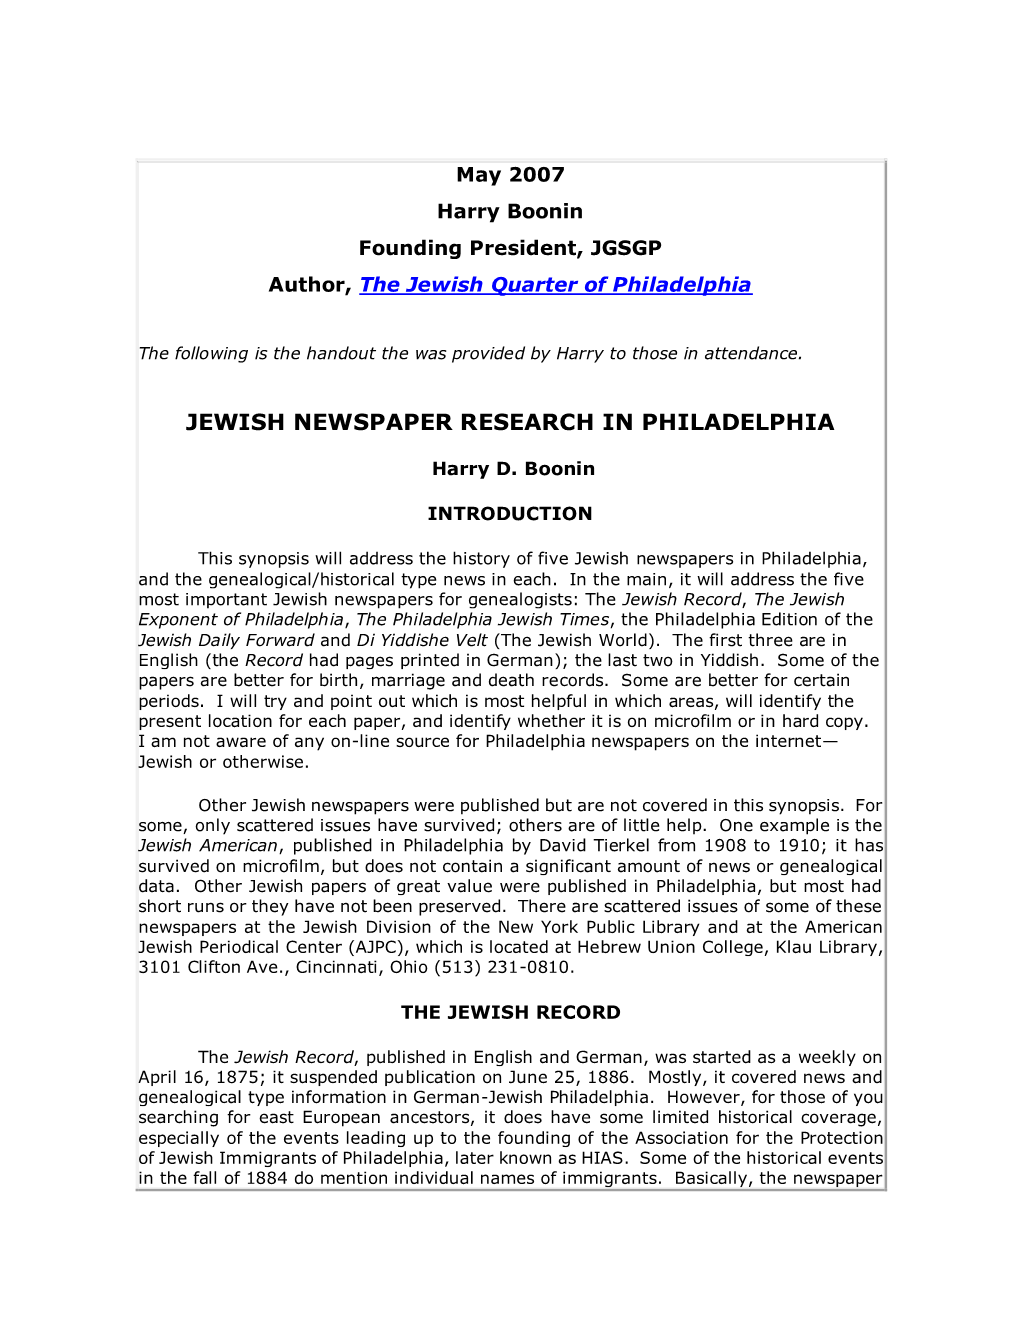 Jewish Newspaper Research in Philadelphia